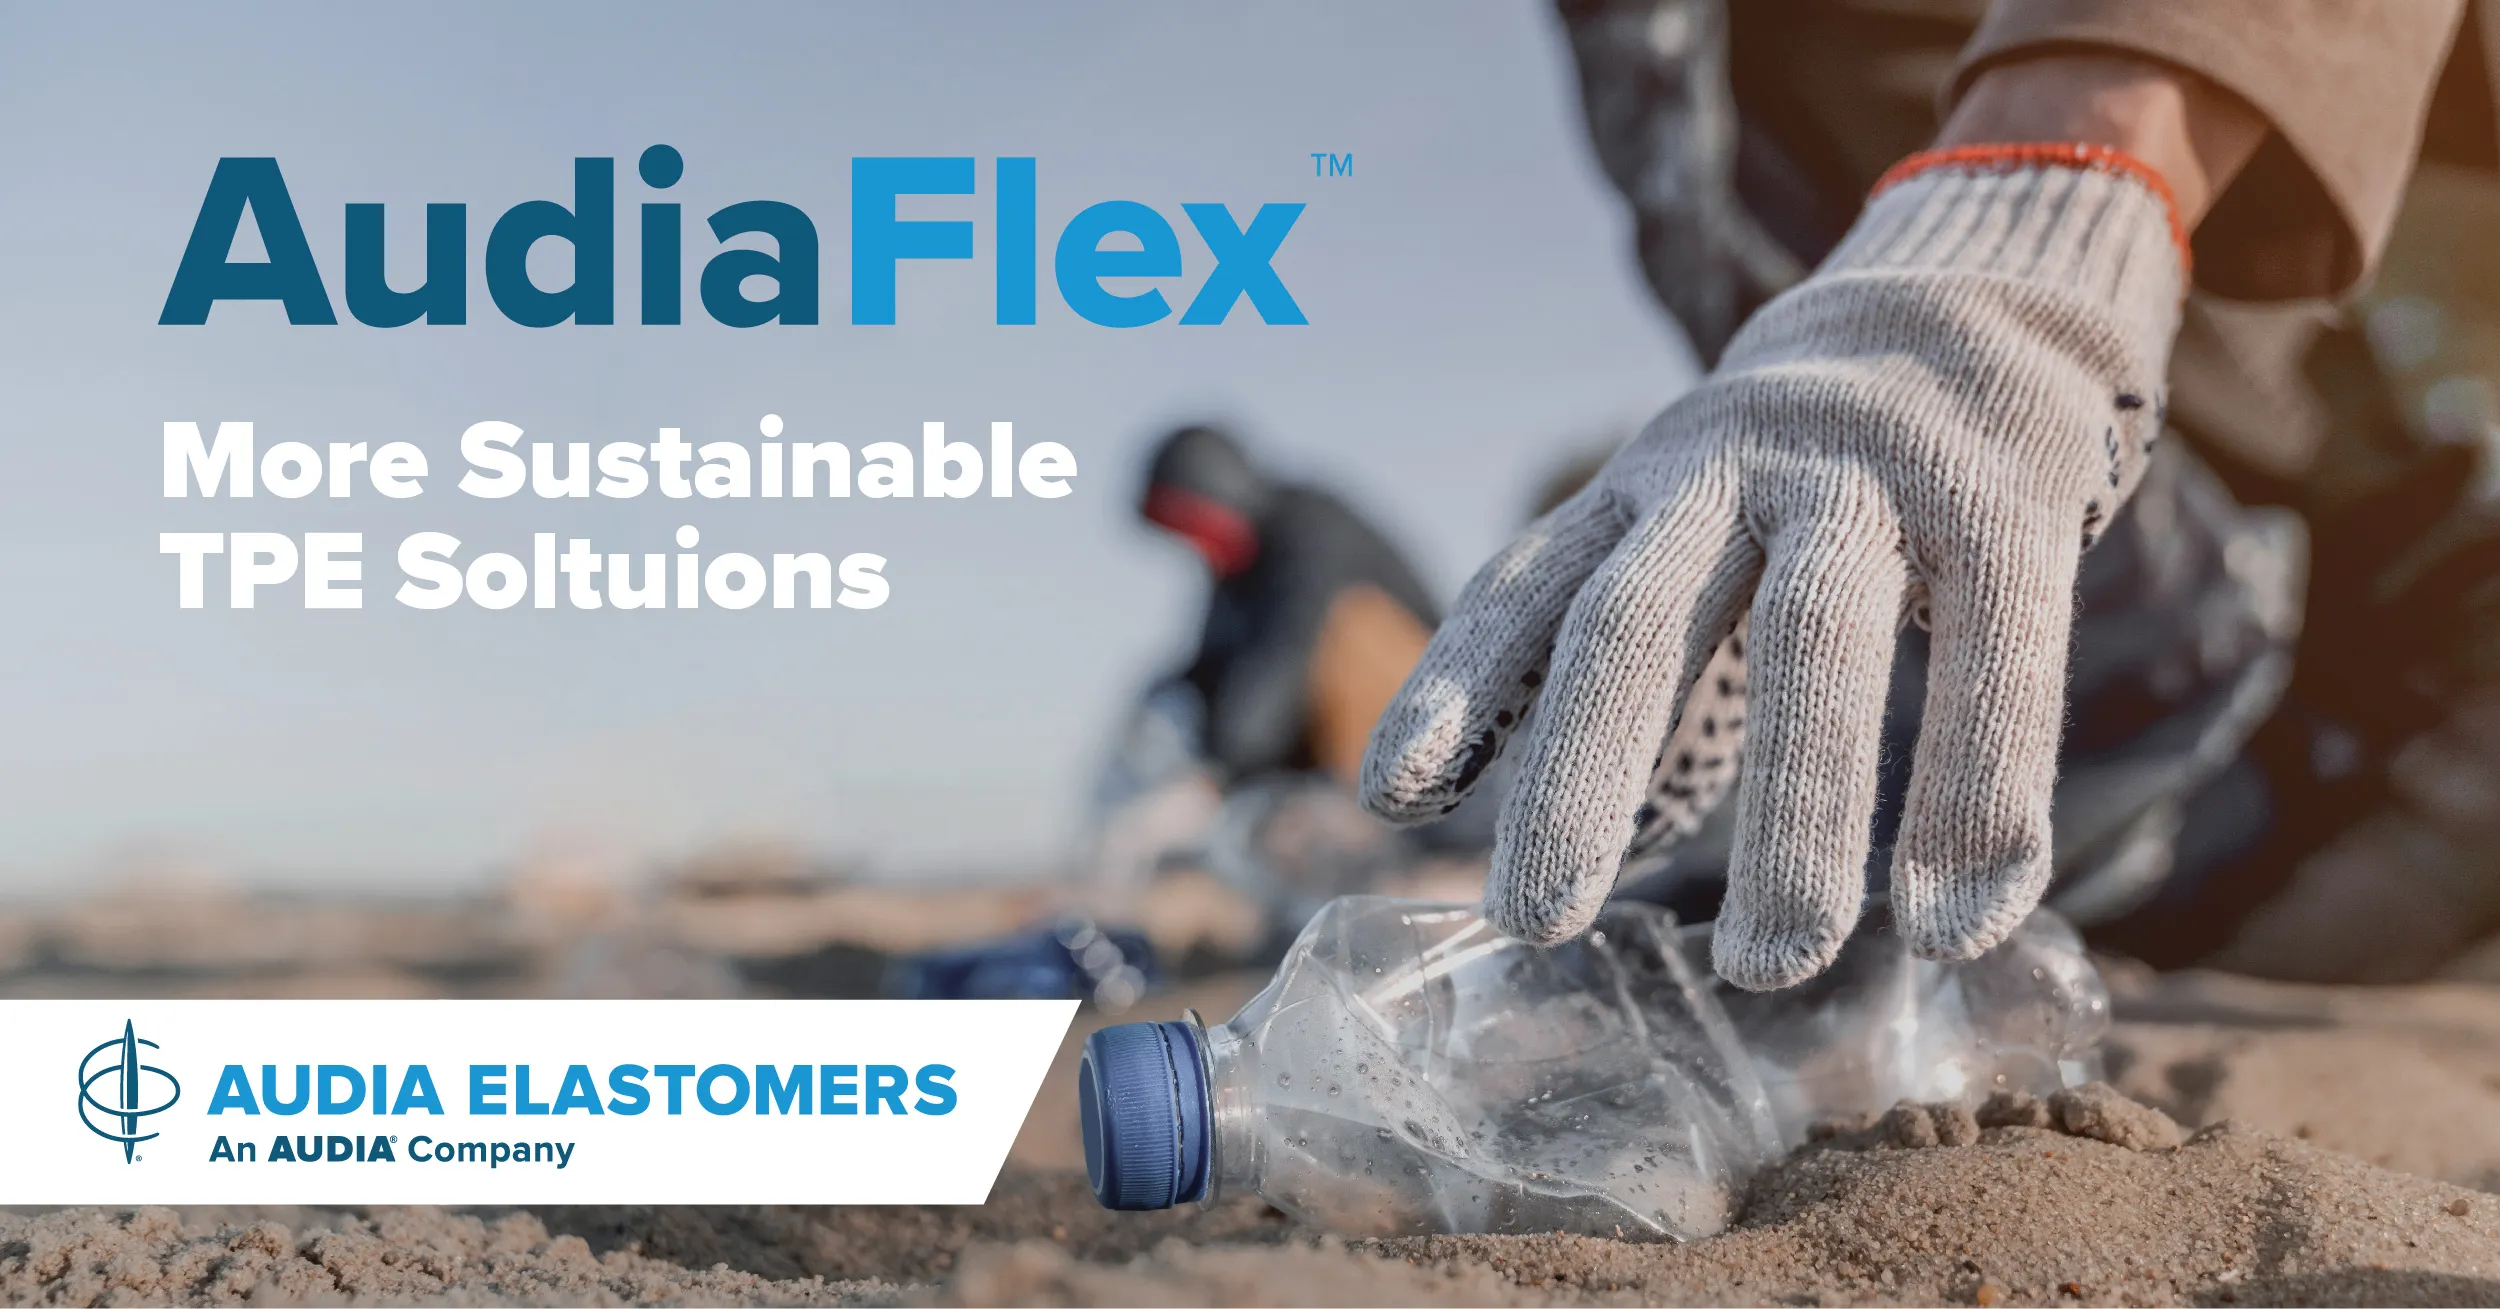 Audia Elastomers AudiaFlex™ Family of Sustainable Thermoplastic Elastomers